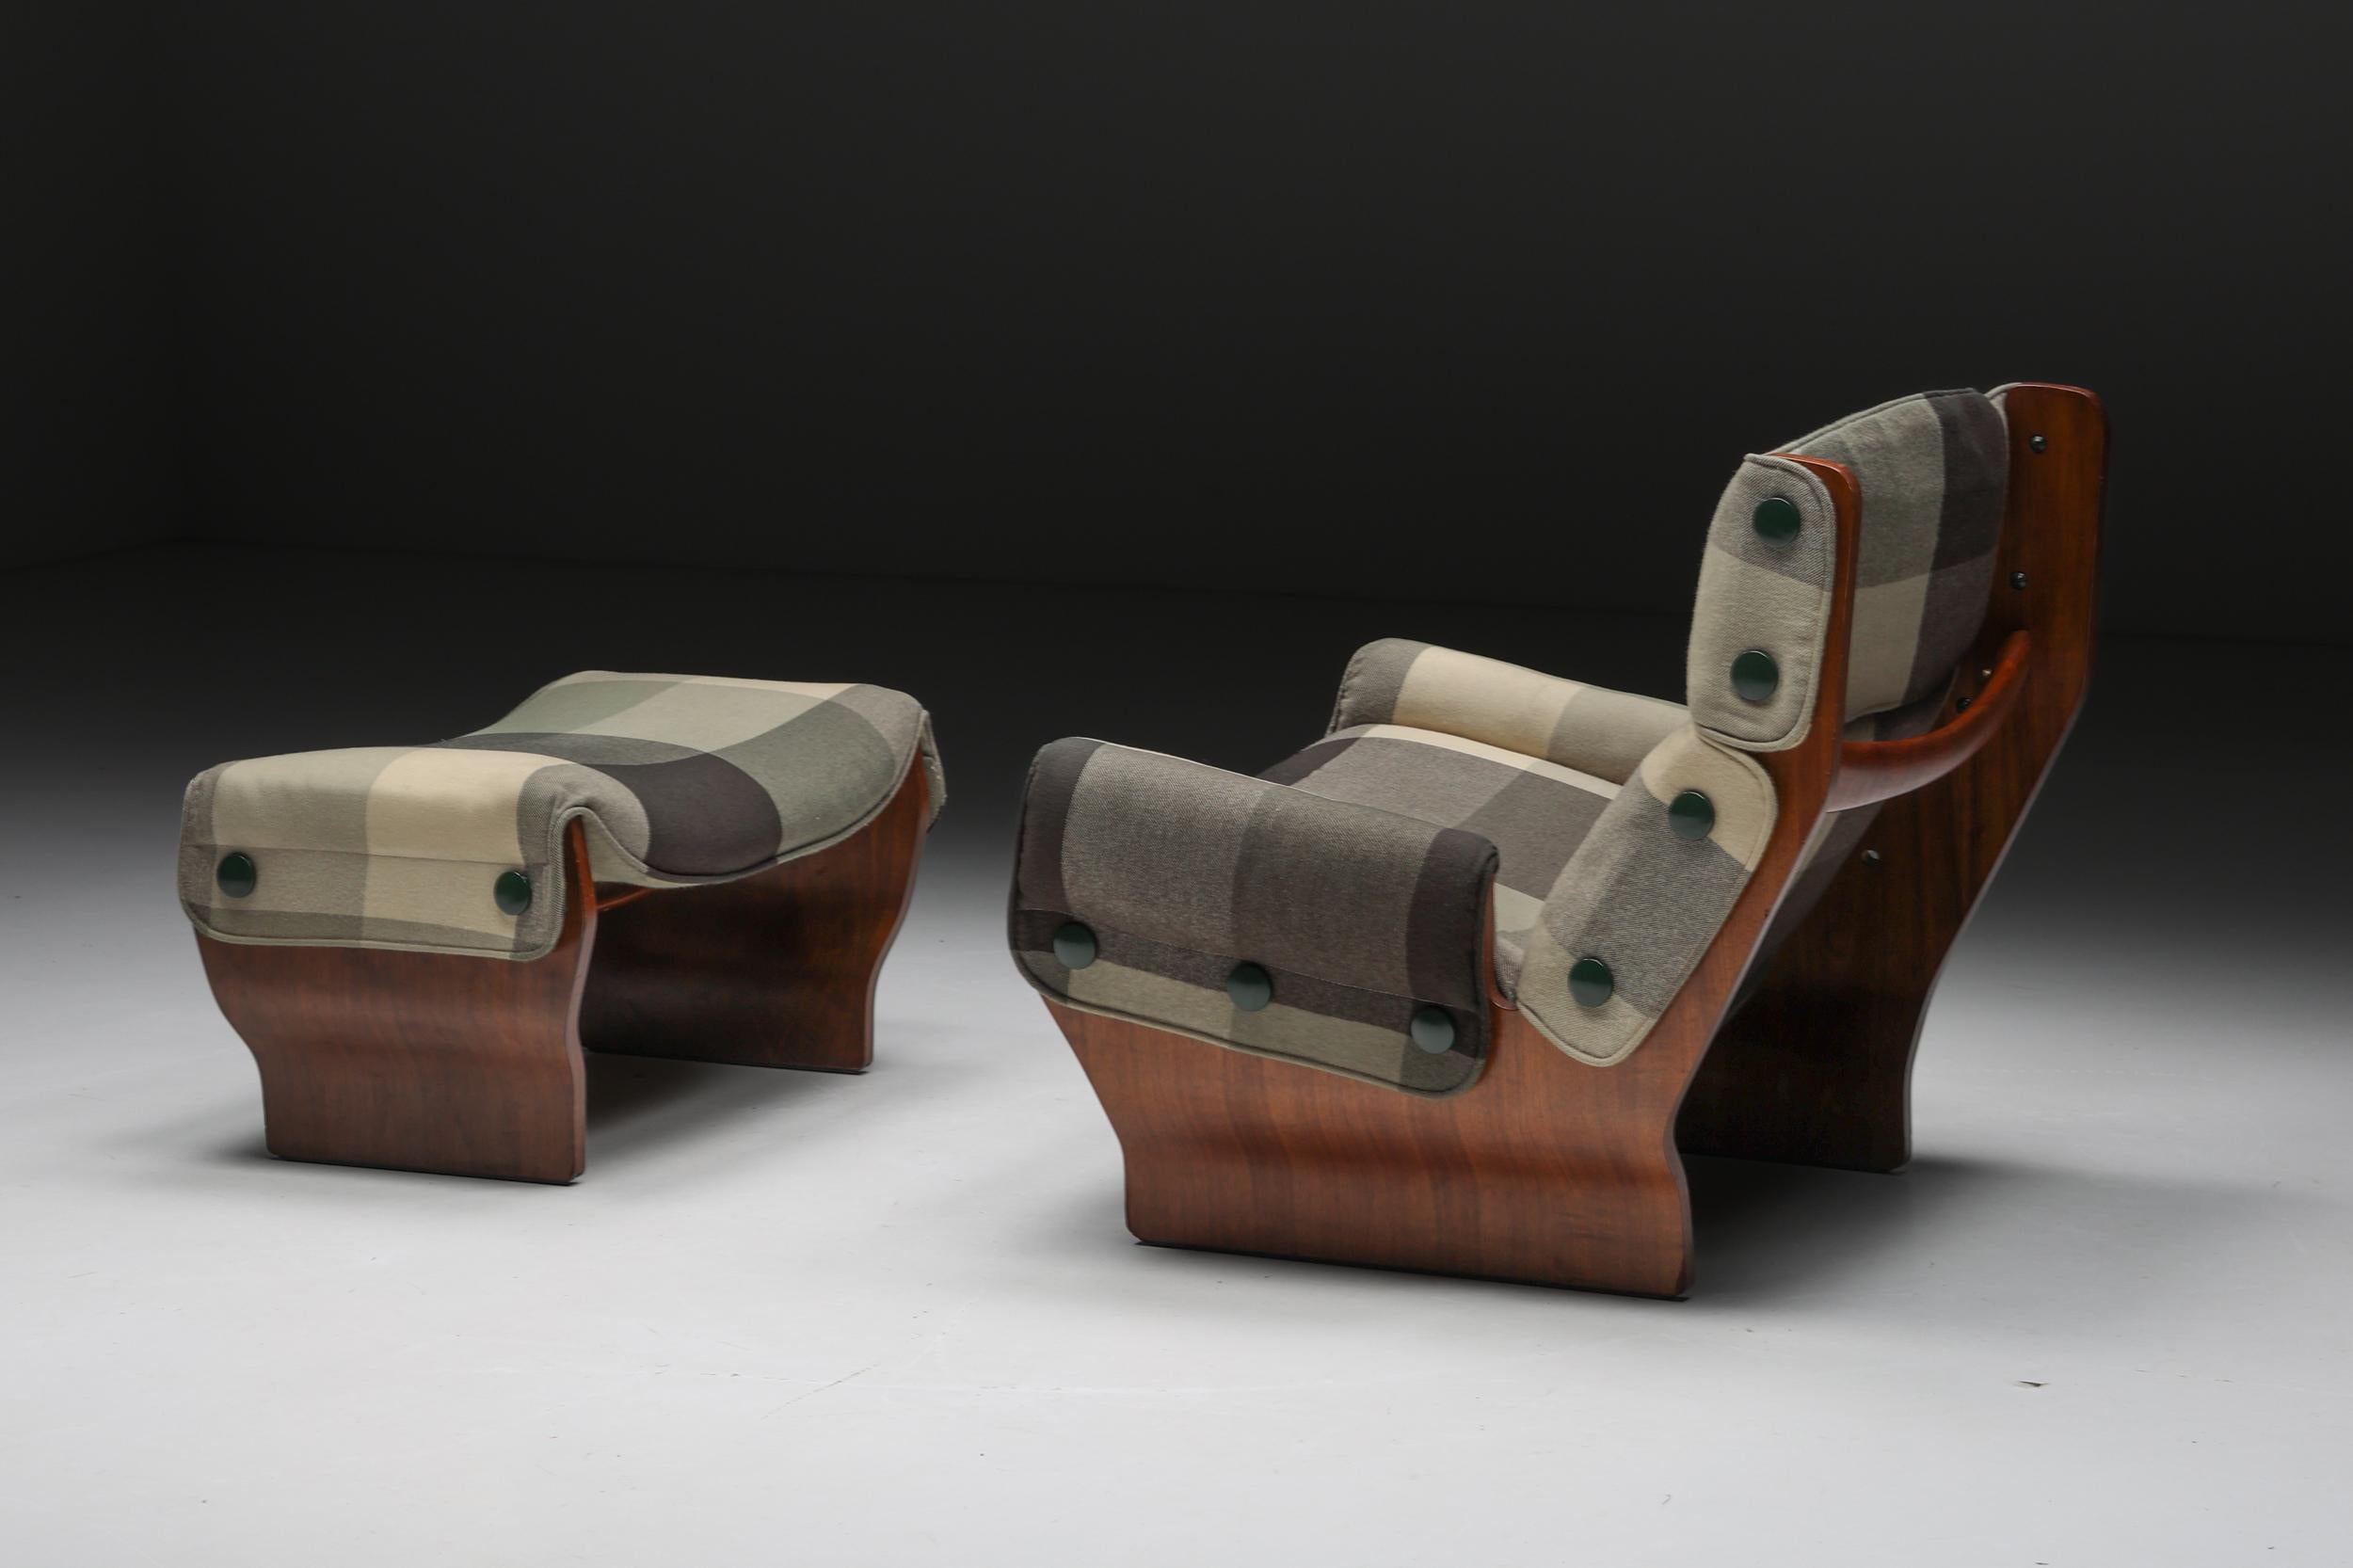 Italian Design; Osvaldo Borsani; Tecno; 1960s; 1965; Italy; Midcentury Modern; Plywood; Lounge chair; Ottoman; 

P110 Canada lounge chair with Ottoman, an exemplar of design ingenuity by Osvaldo Borsani for Tecno in 1965. This exceptionally